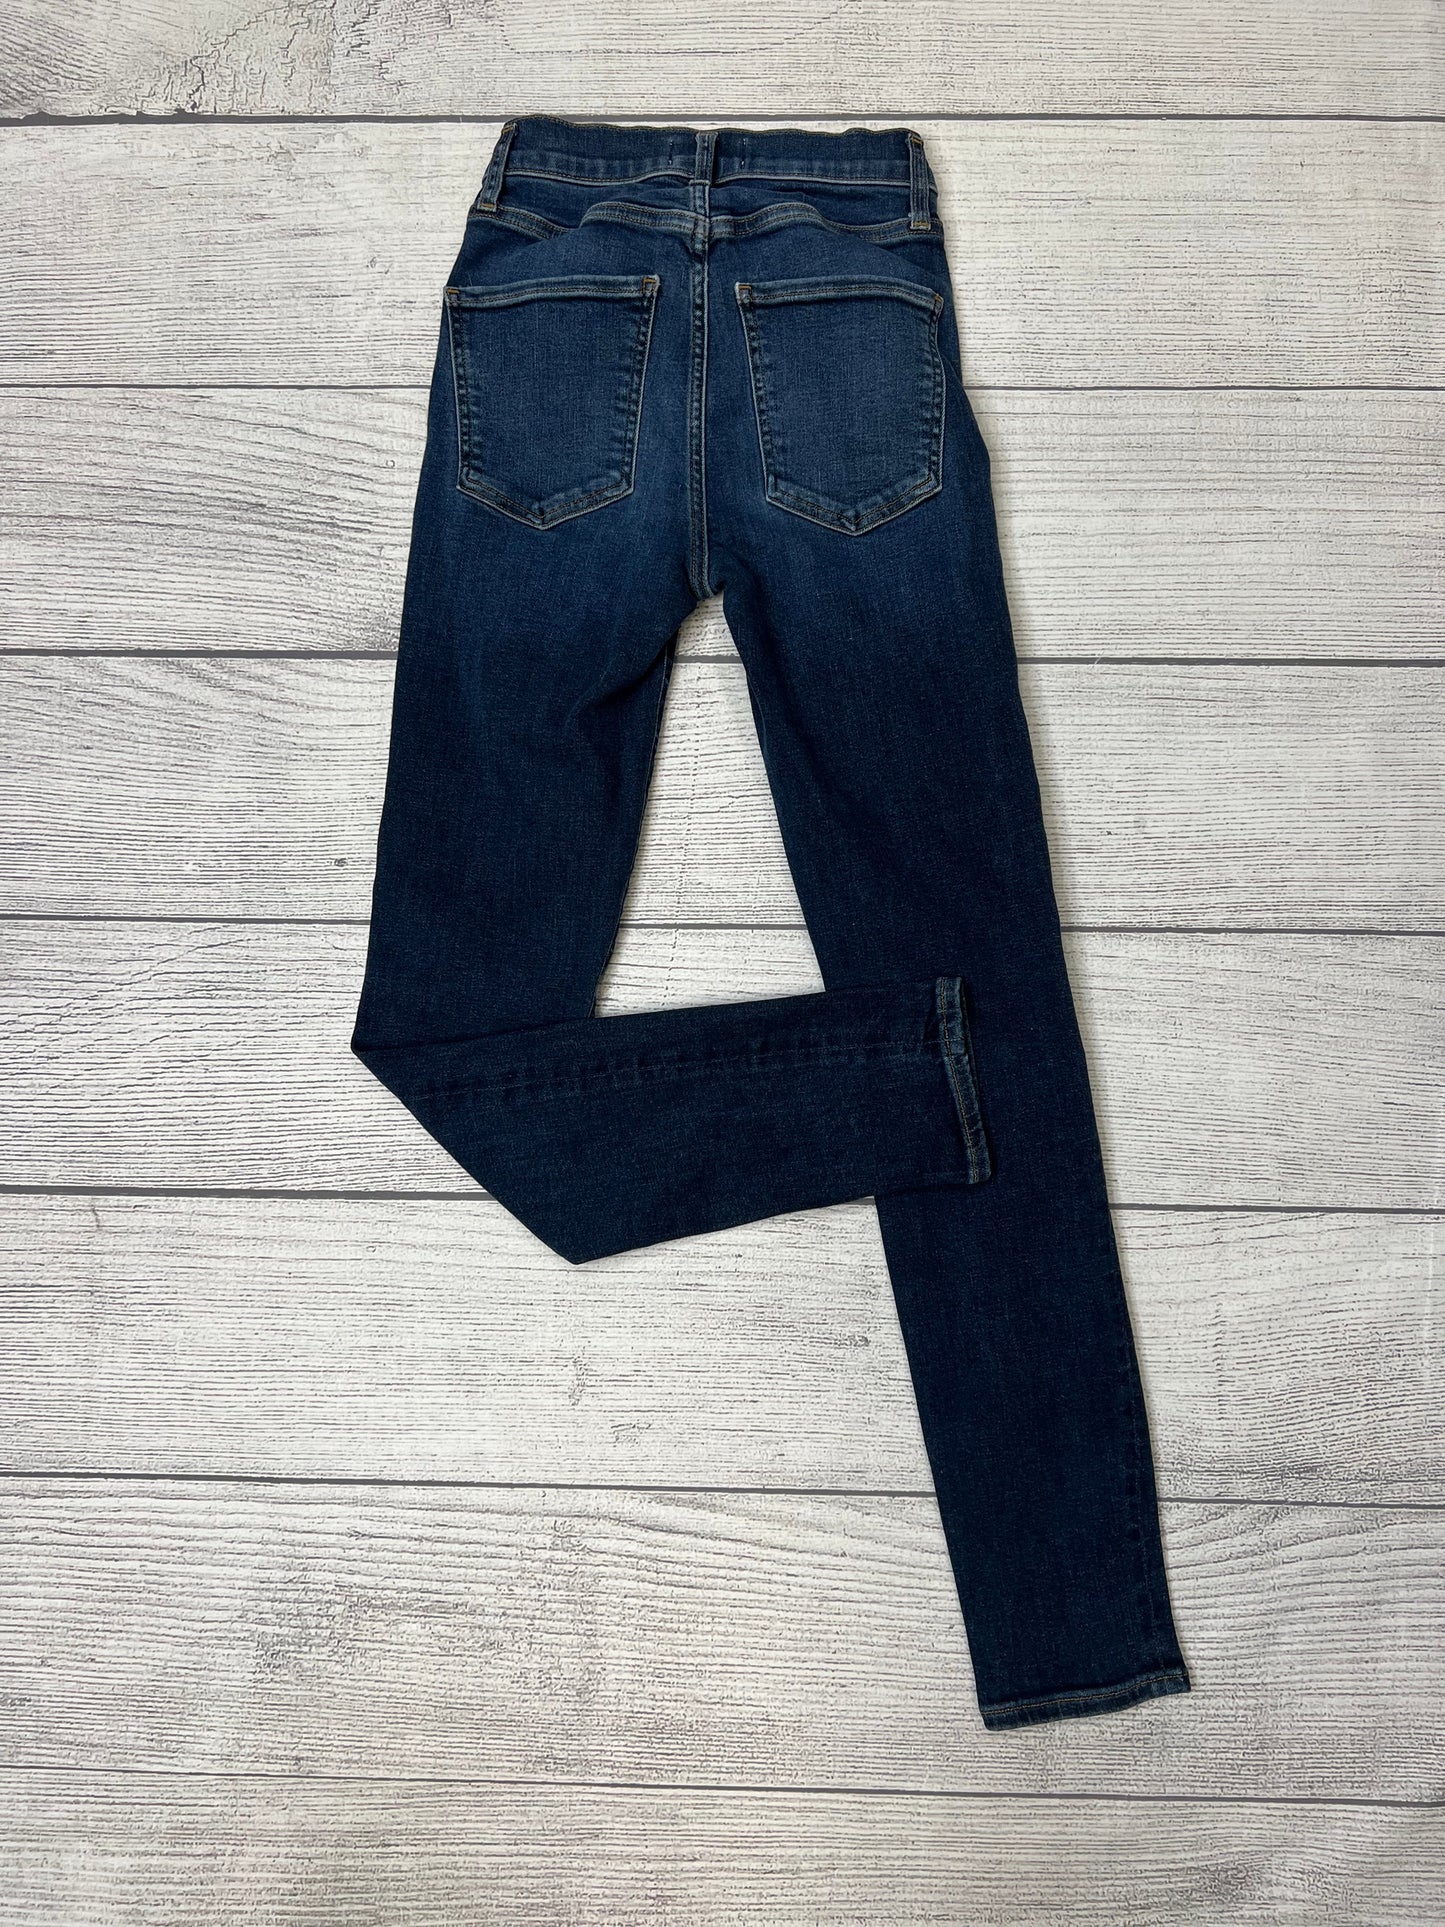 Jeans Designer By Agolde  Size: 0